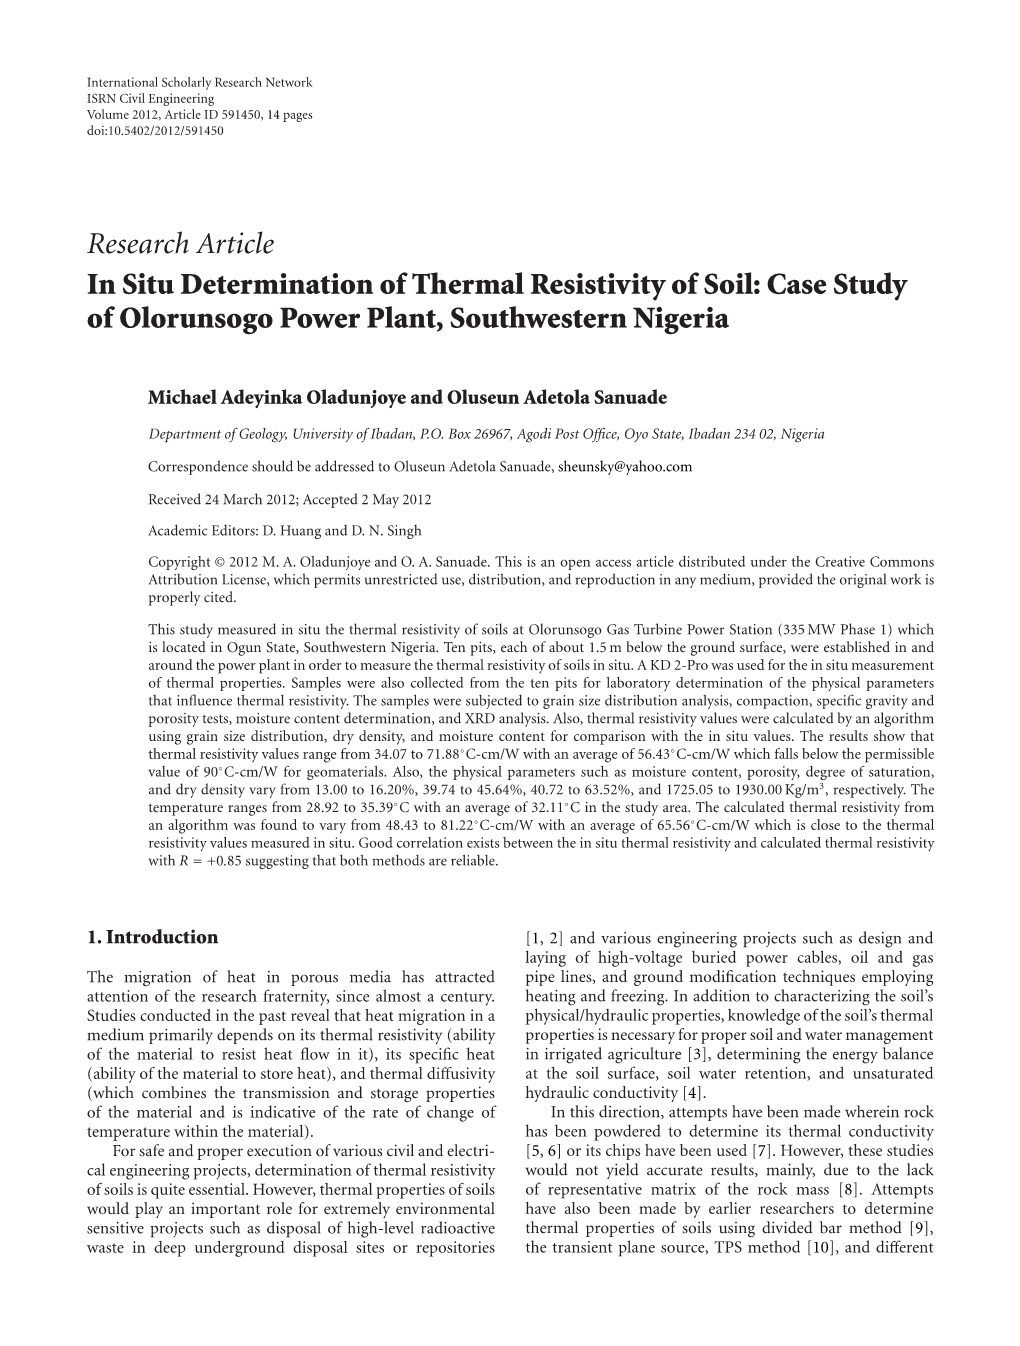 Case Study of Olorunsogo Power Plant, Southwestern Nigeria